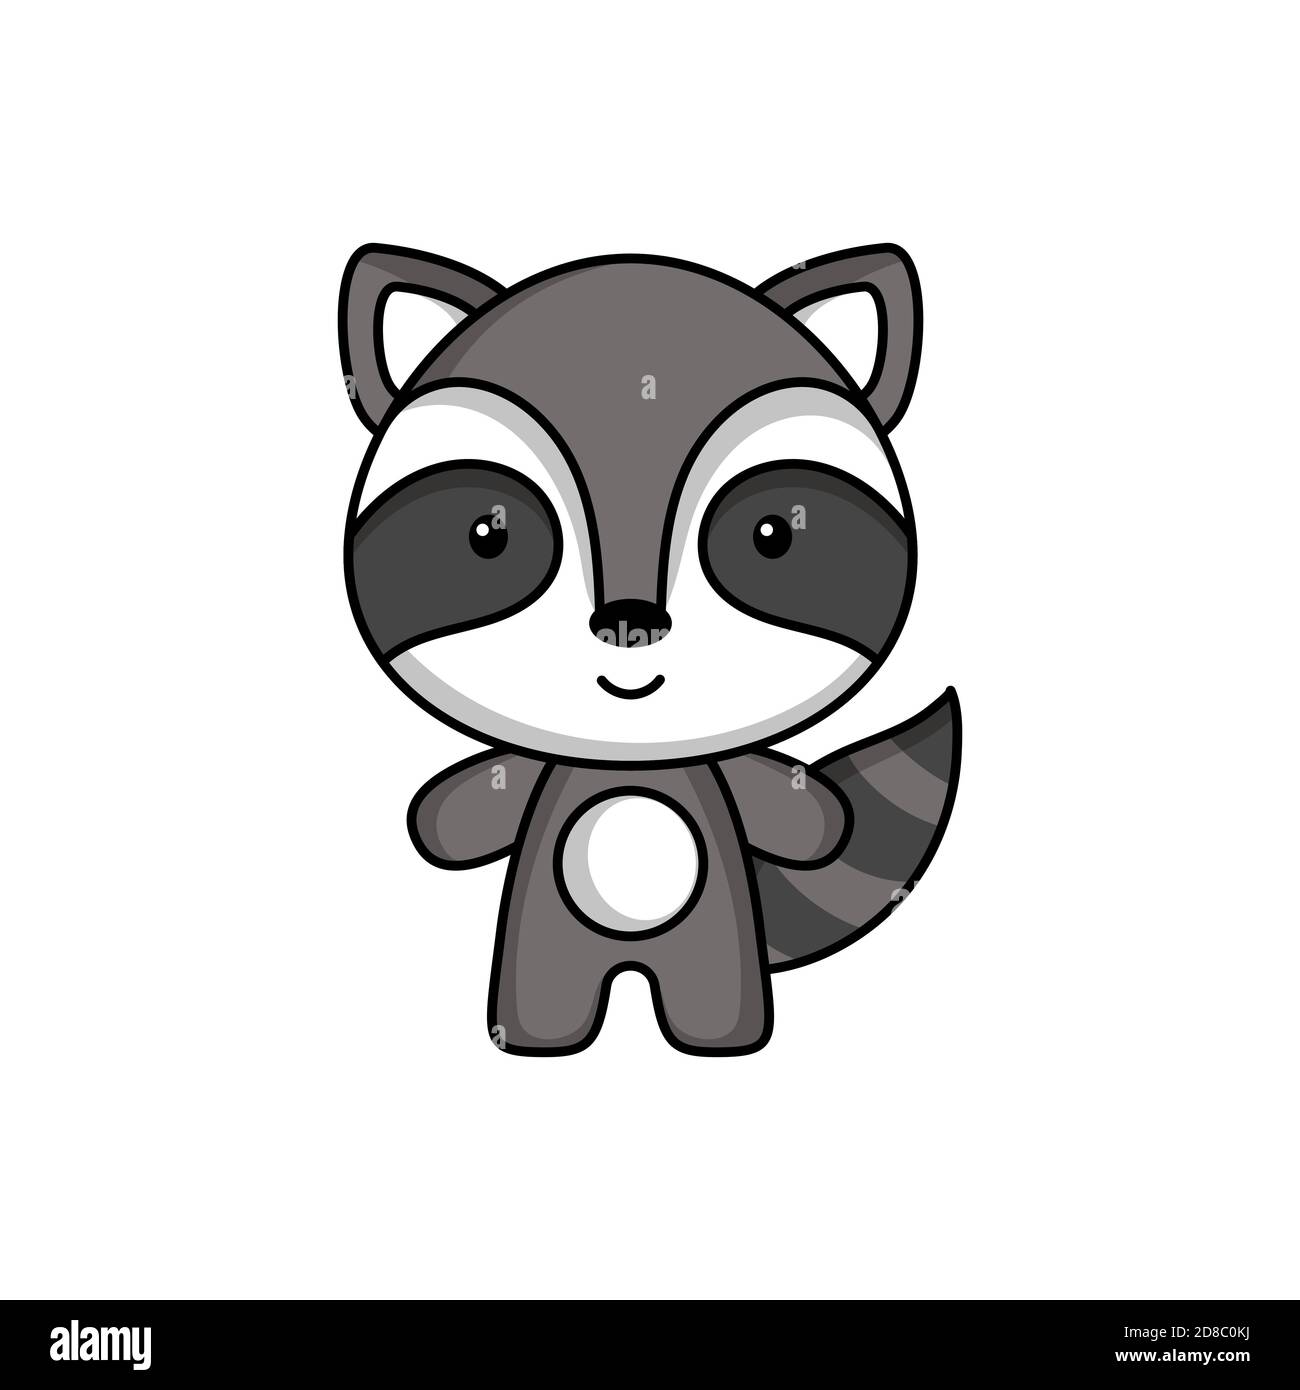 Cute cartoon raccoon logo template on white background. Mascot animal character design of album, scrapbook, greeting card, invitation, flyer, sticker, Stock Vector